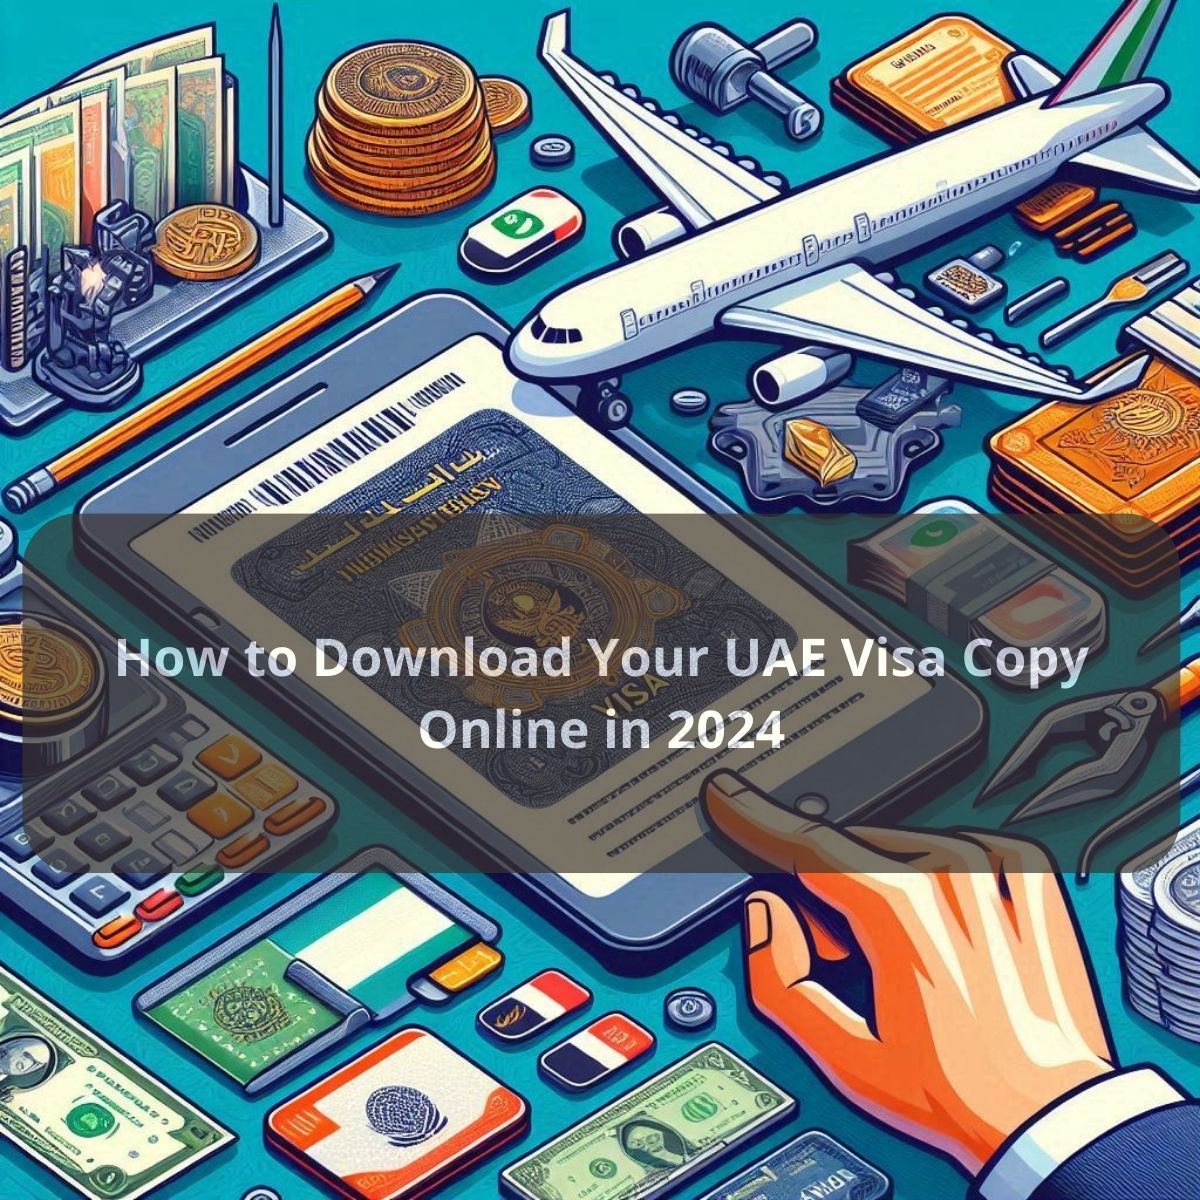 Download Your UAE Visa Copy Online.jpg